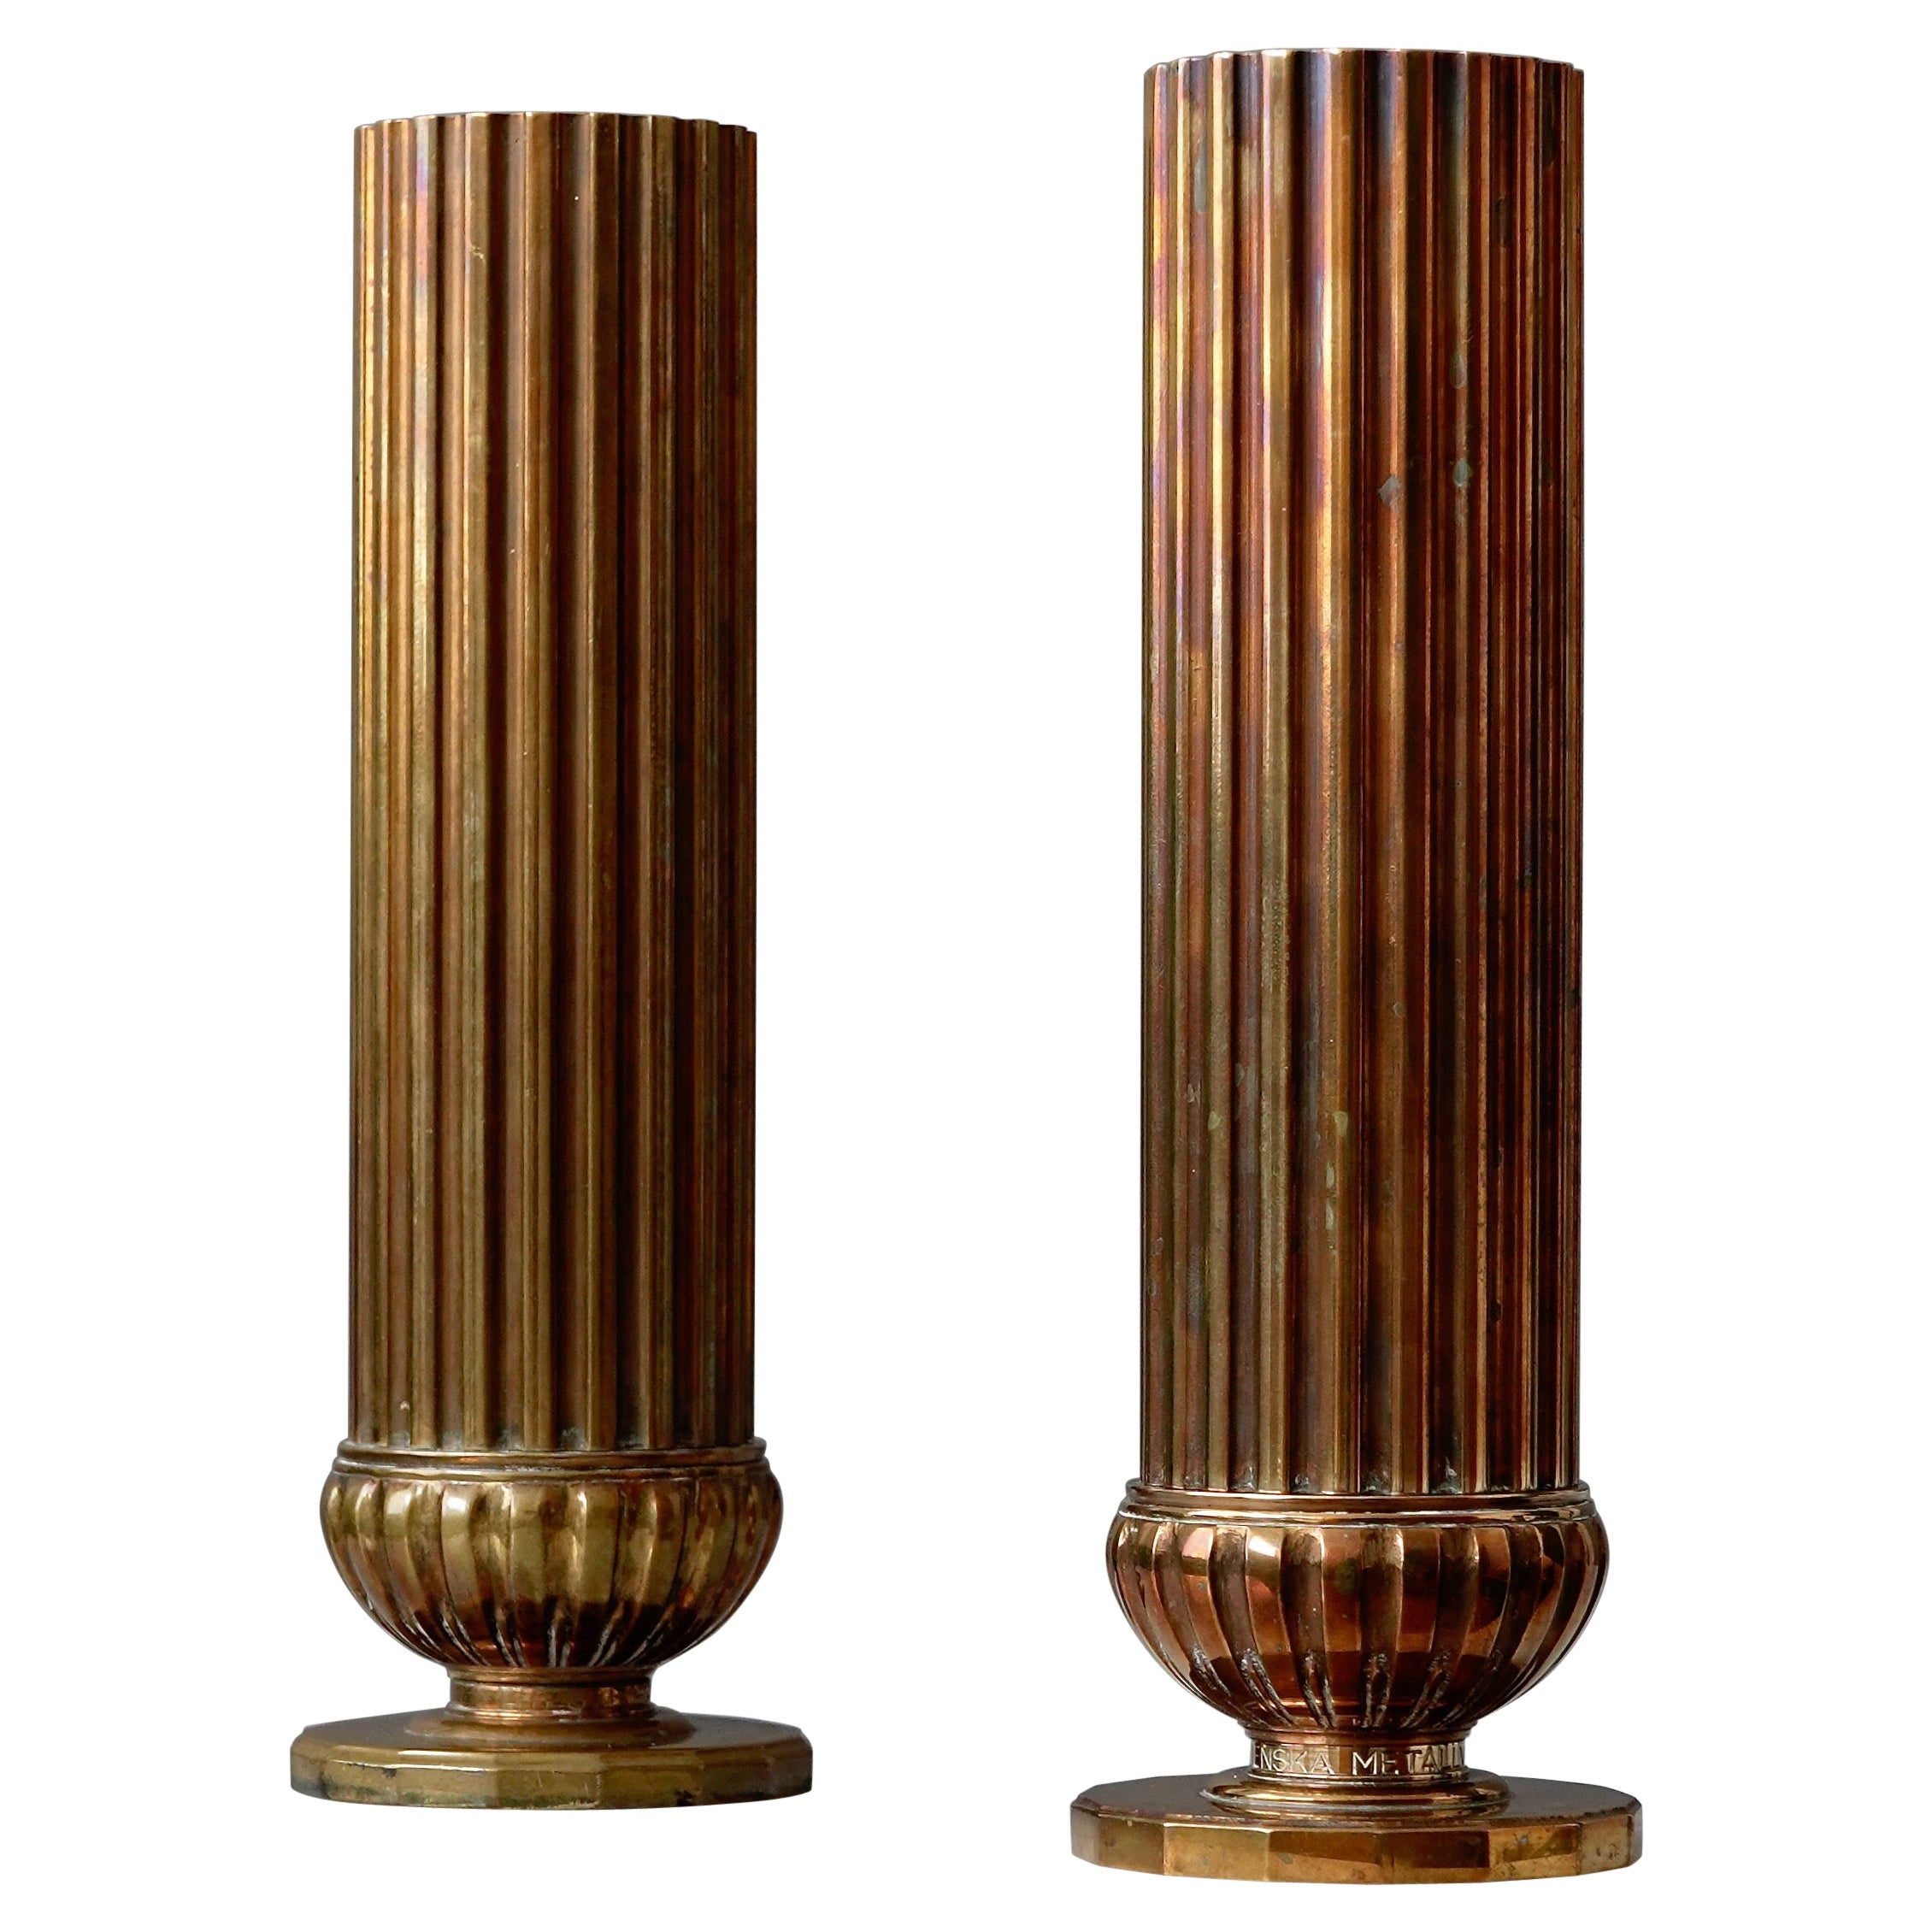 A pair of Bronze Art Deco Vases by SVM Handarbete, Sweden, 1930s